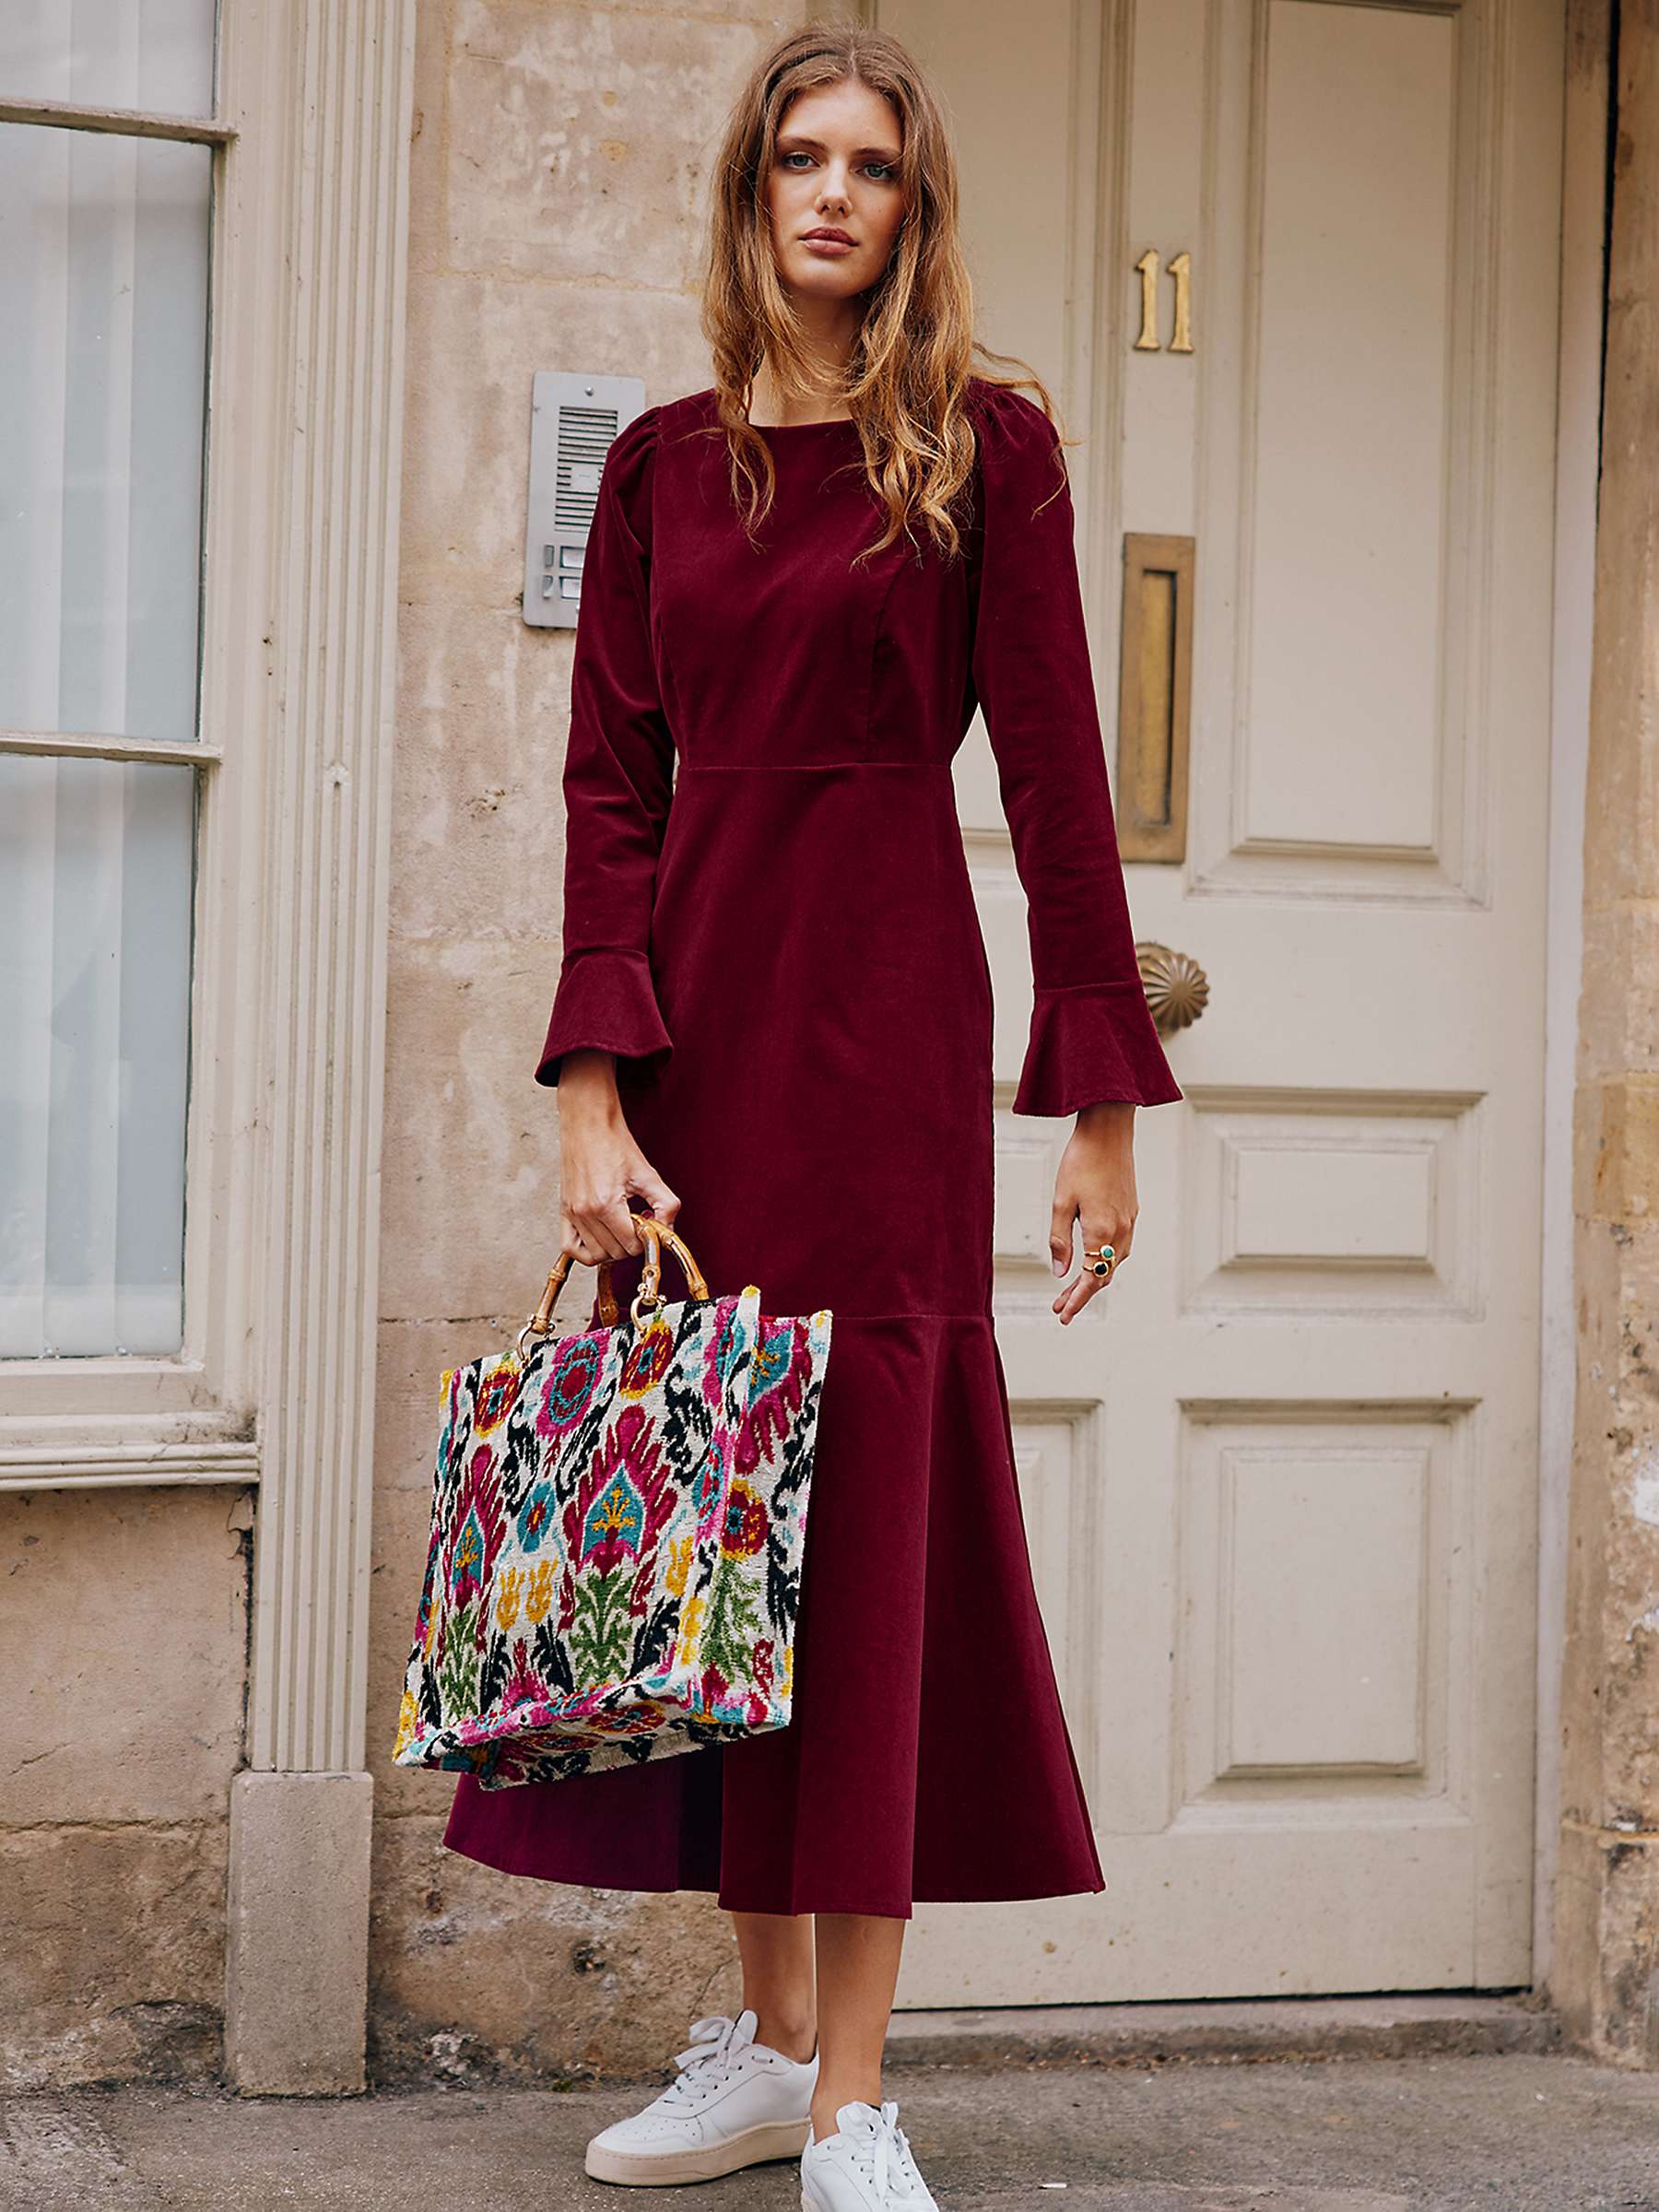 Buy Aspiga Rachel Corduroy Midi Dress Online at johnlewis.com